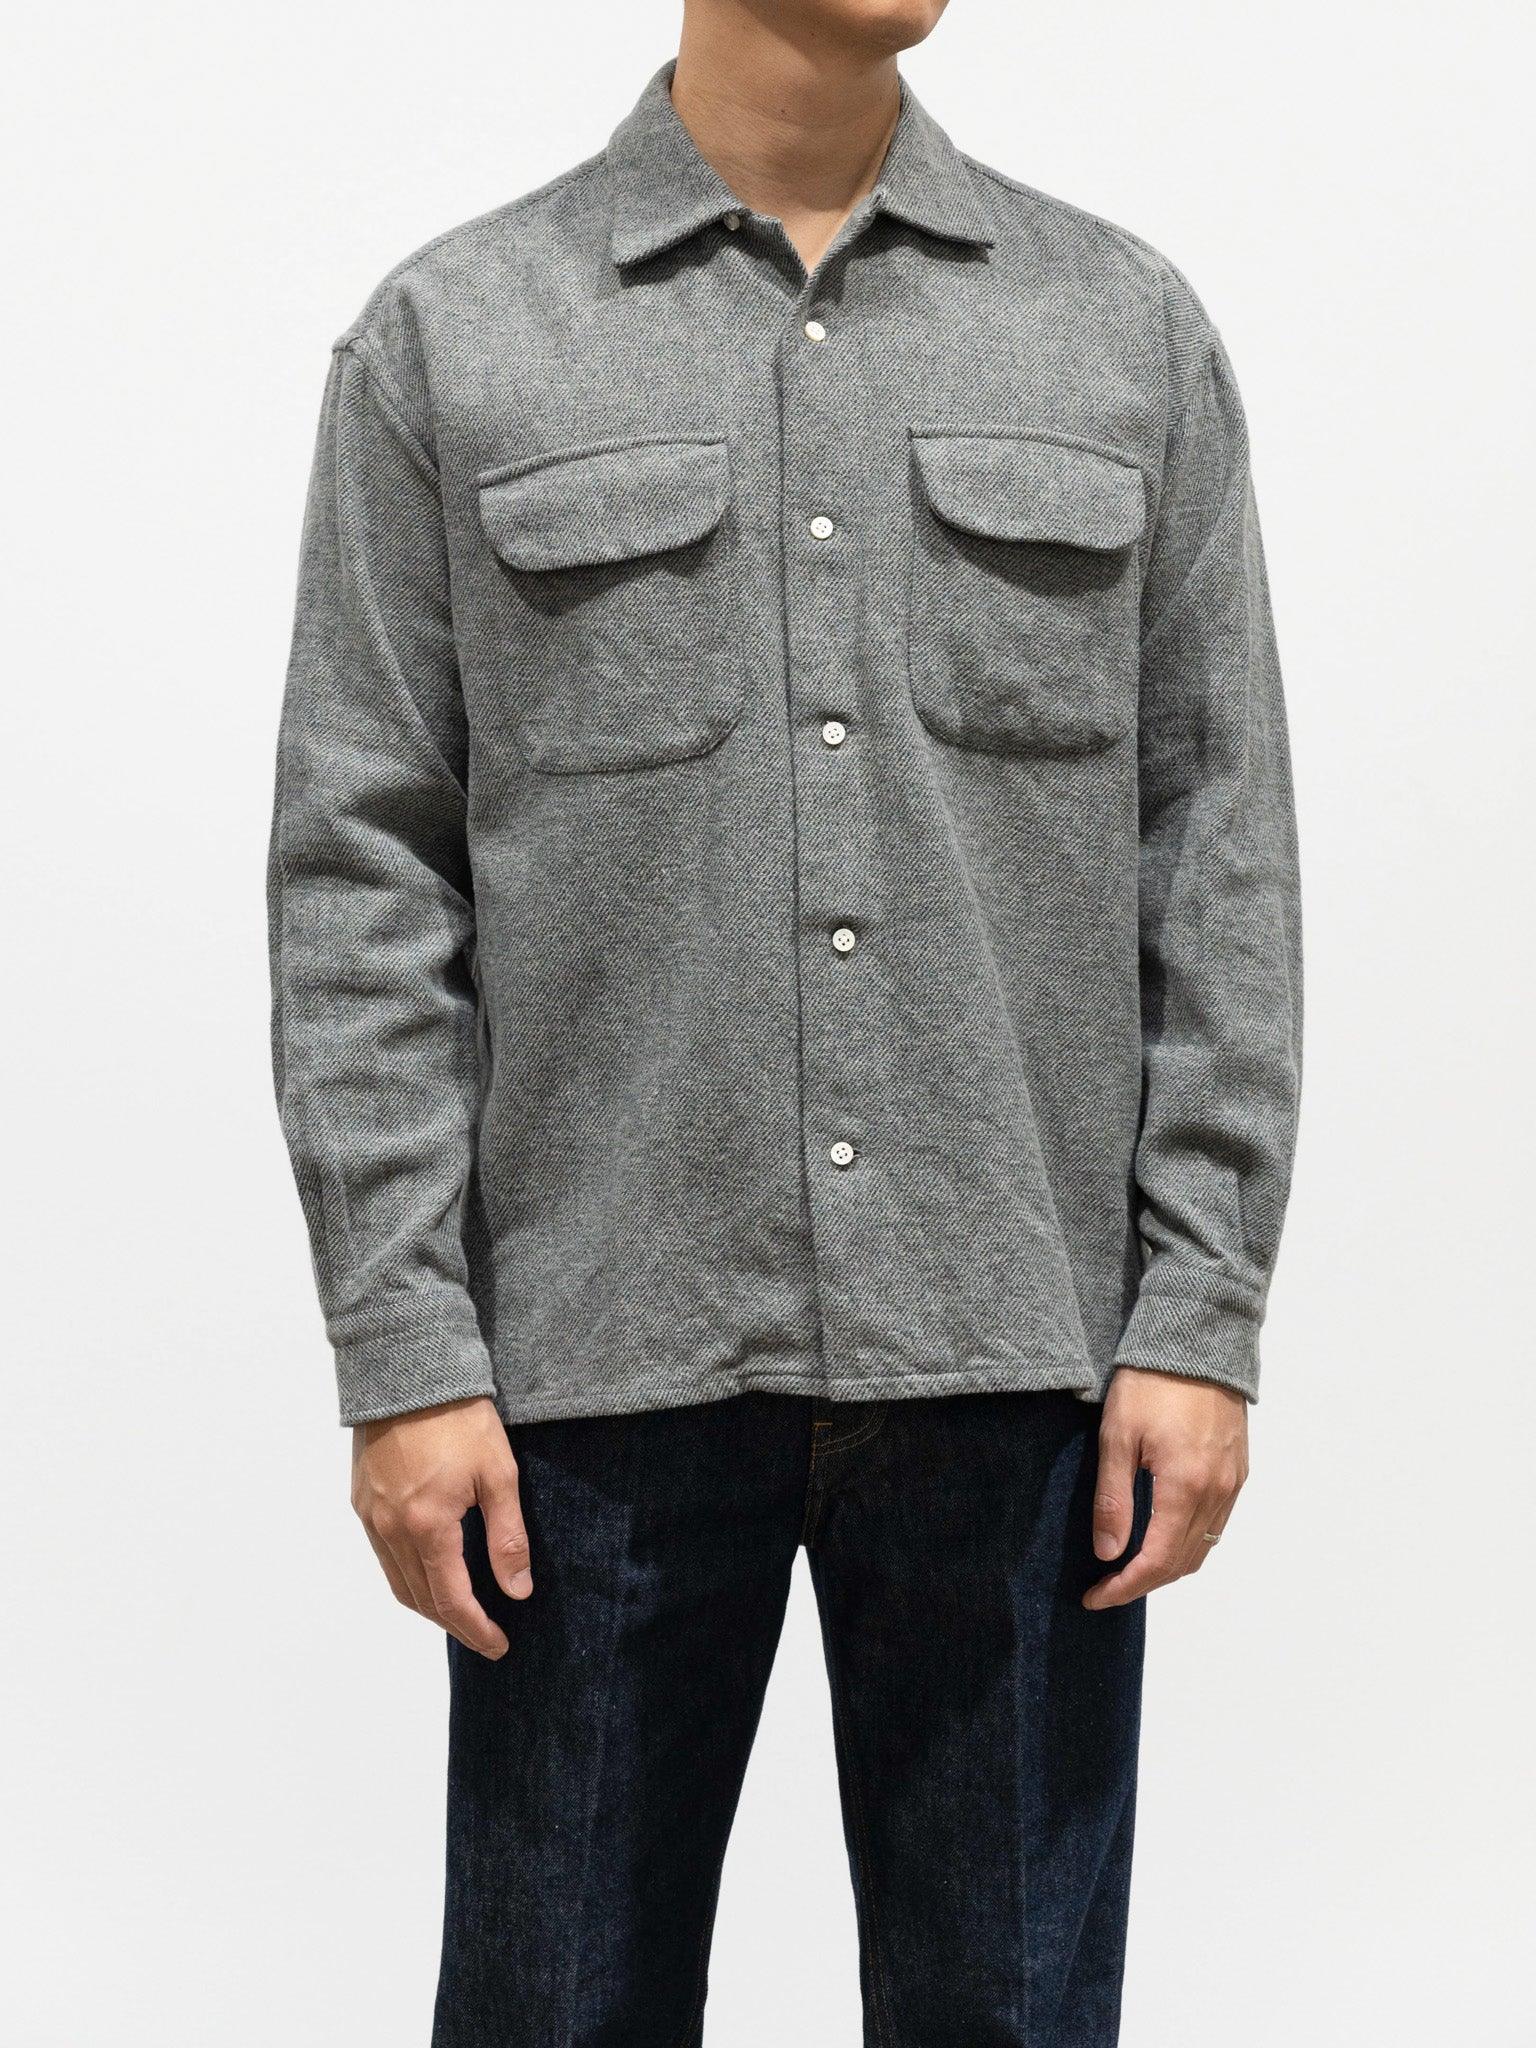 Namu Shop - ts(s) Round Color Shirt Cotton Mixed Gray Flap Pocket Baggy 